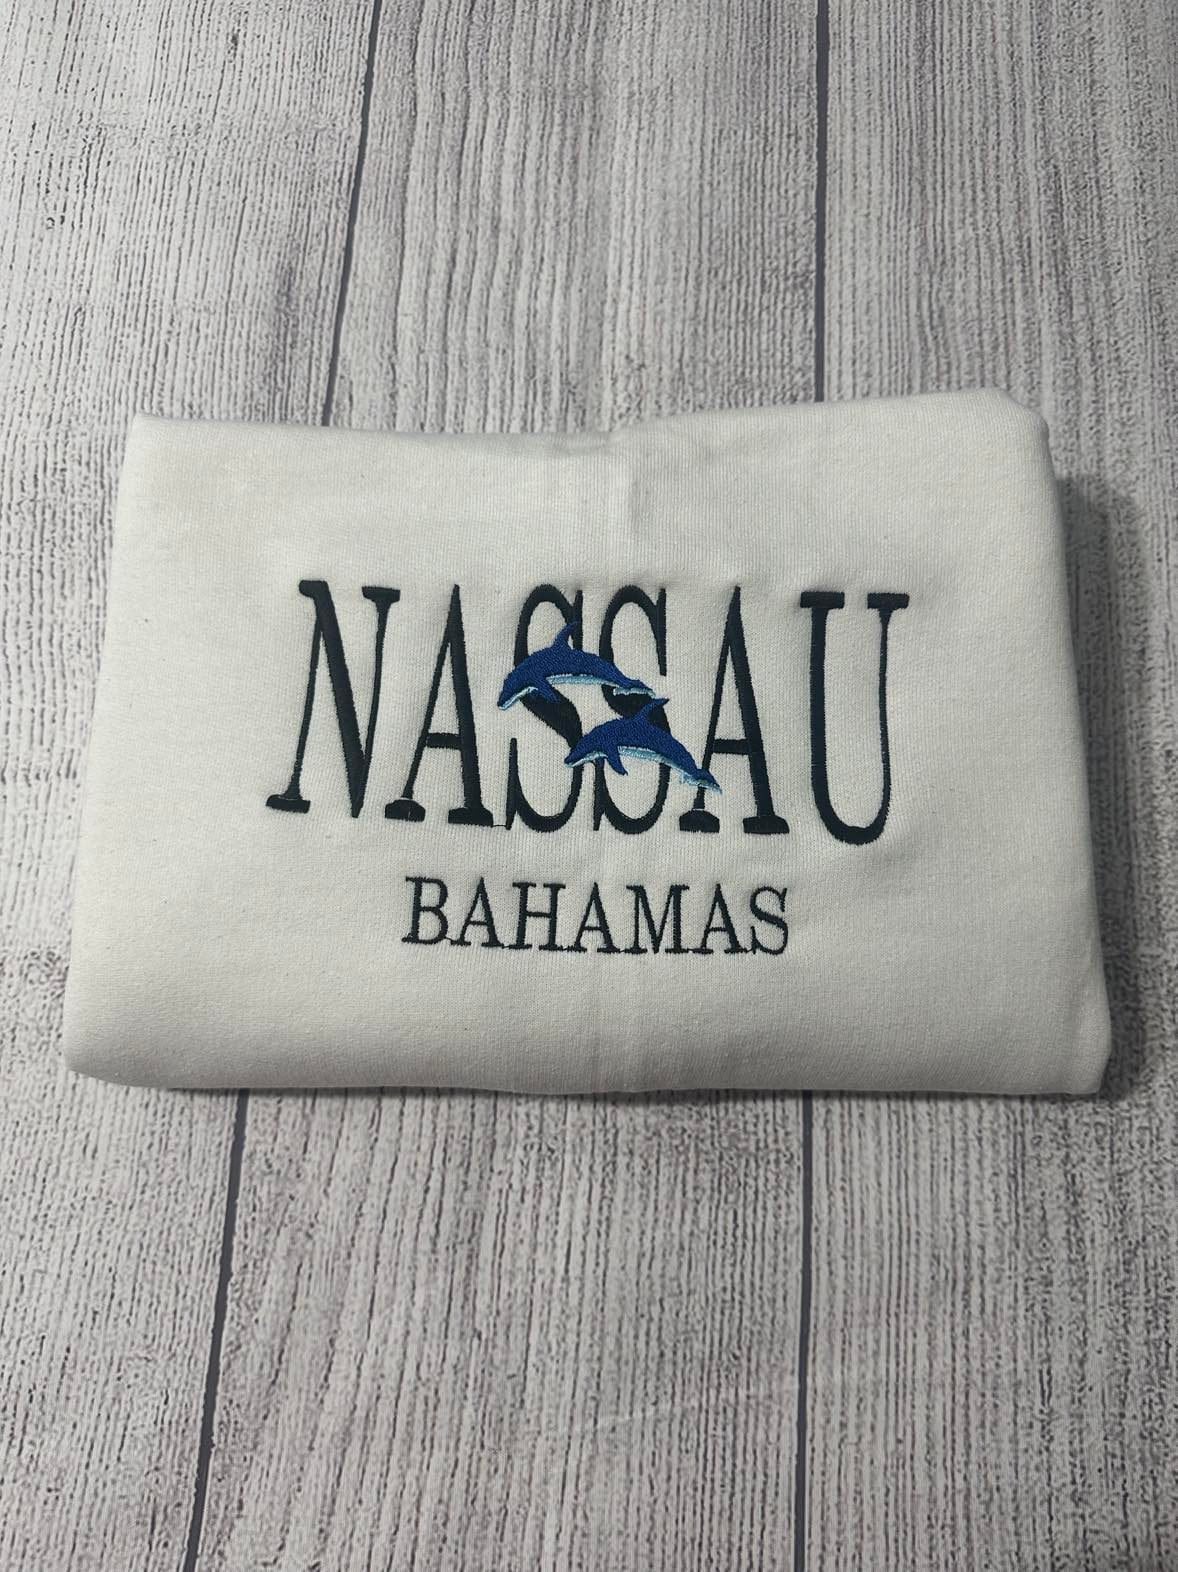 NASSAU BAHAMAS embroidered crewneck; Bahamas Crewneck perfect gift for Dolphin lovers